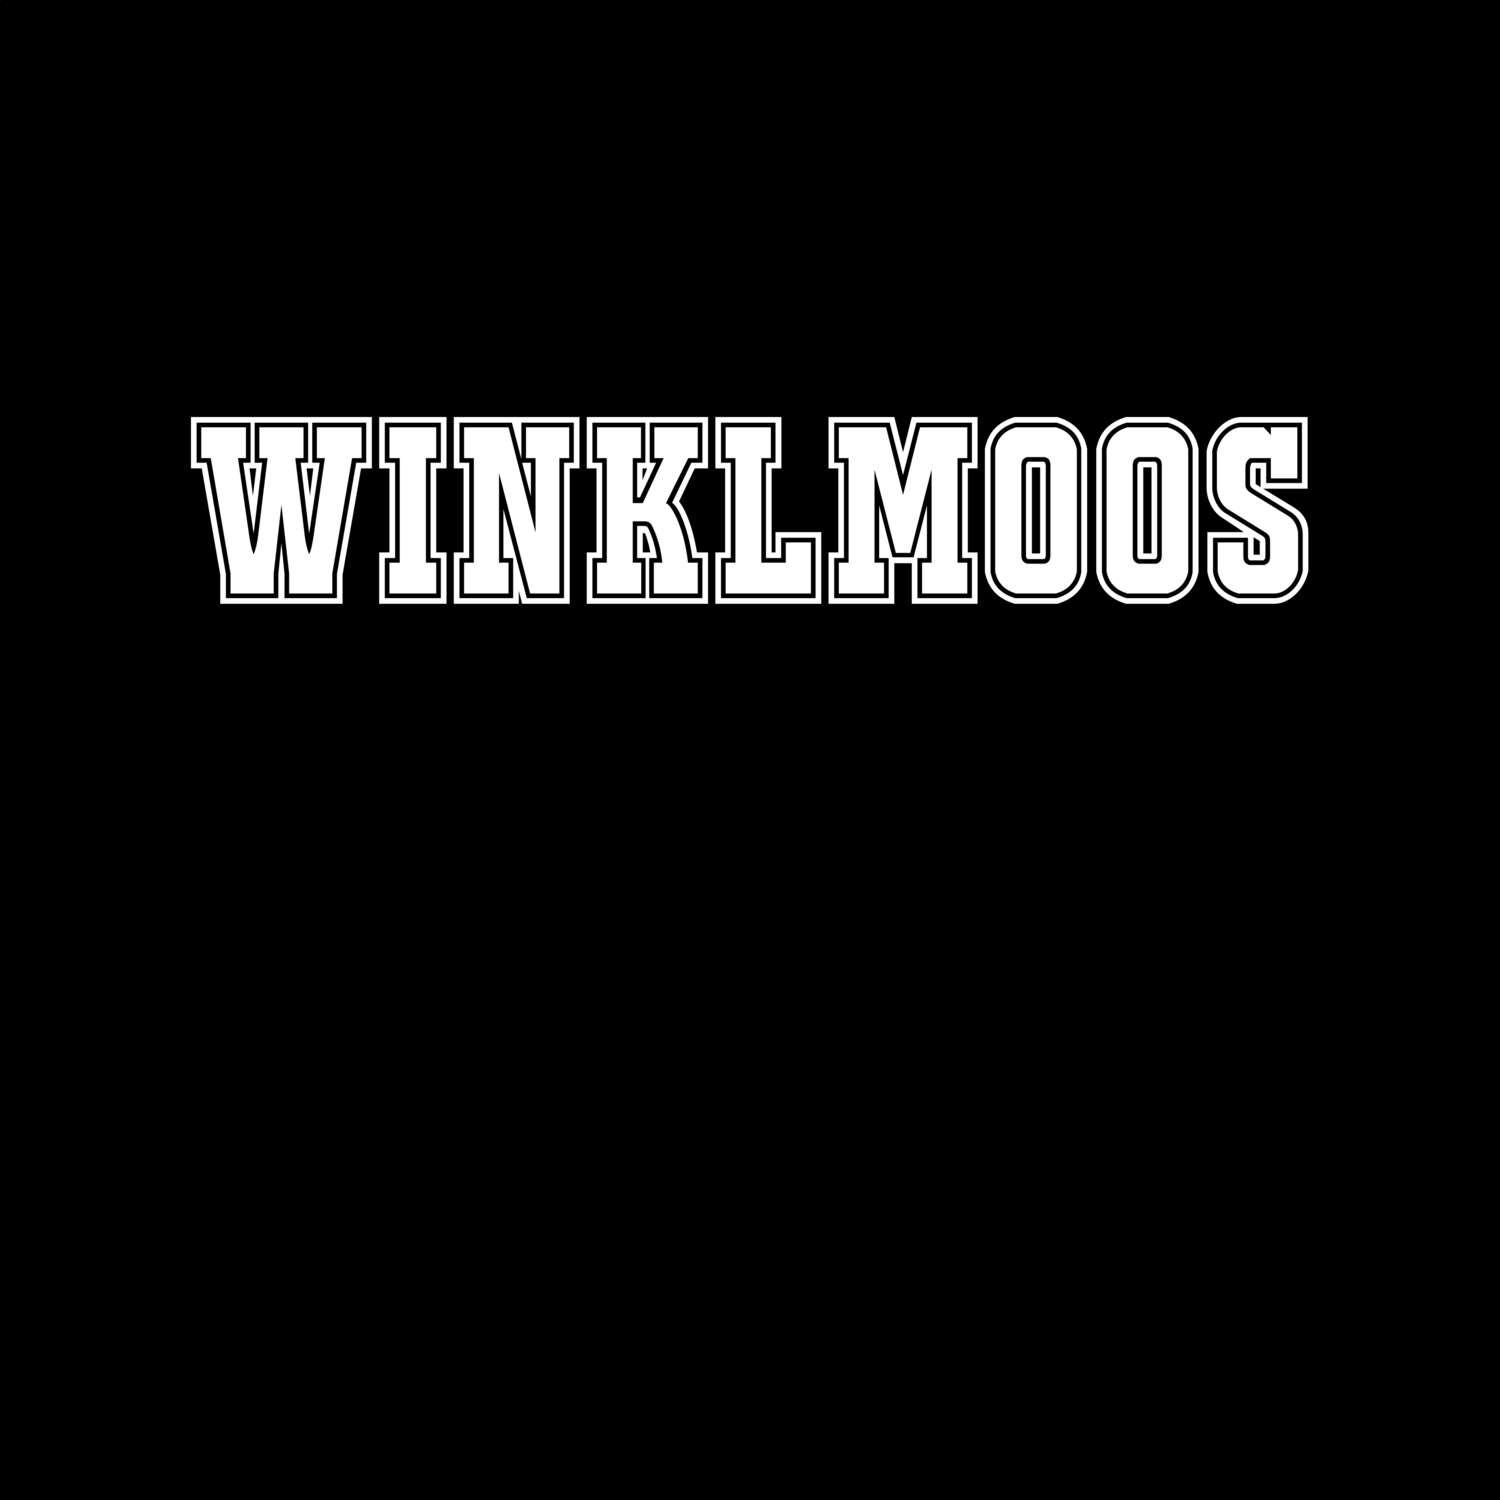 Winklmoos T-Shirt »Classic«